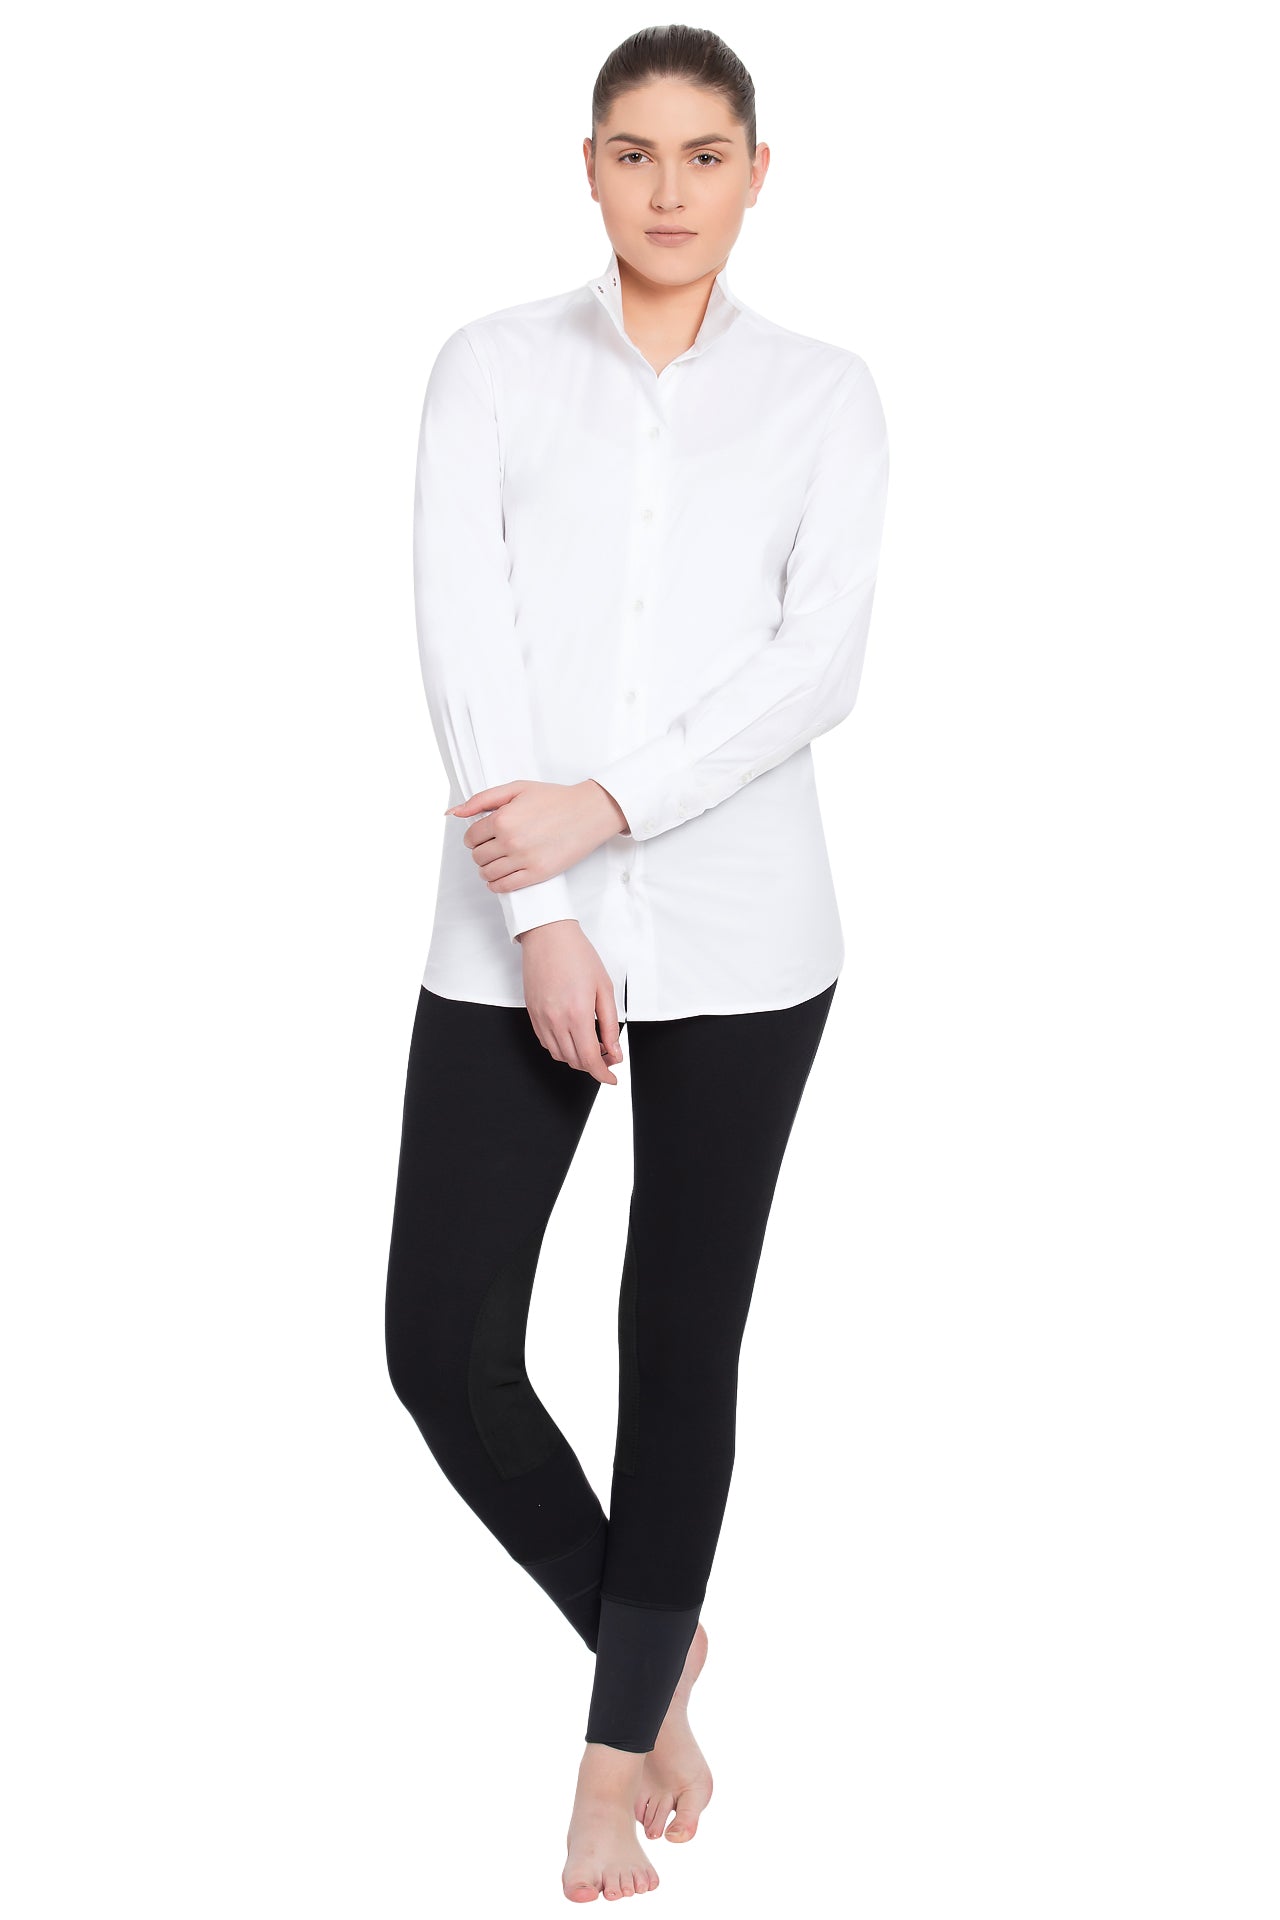 TuffRider Ladies Starter Long Sleeve Show Shirt - Breeches.com